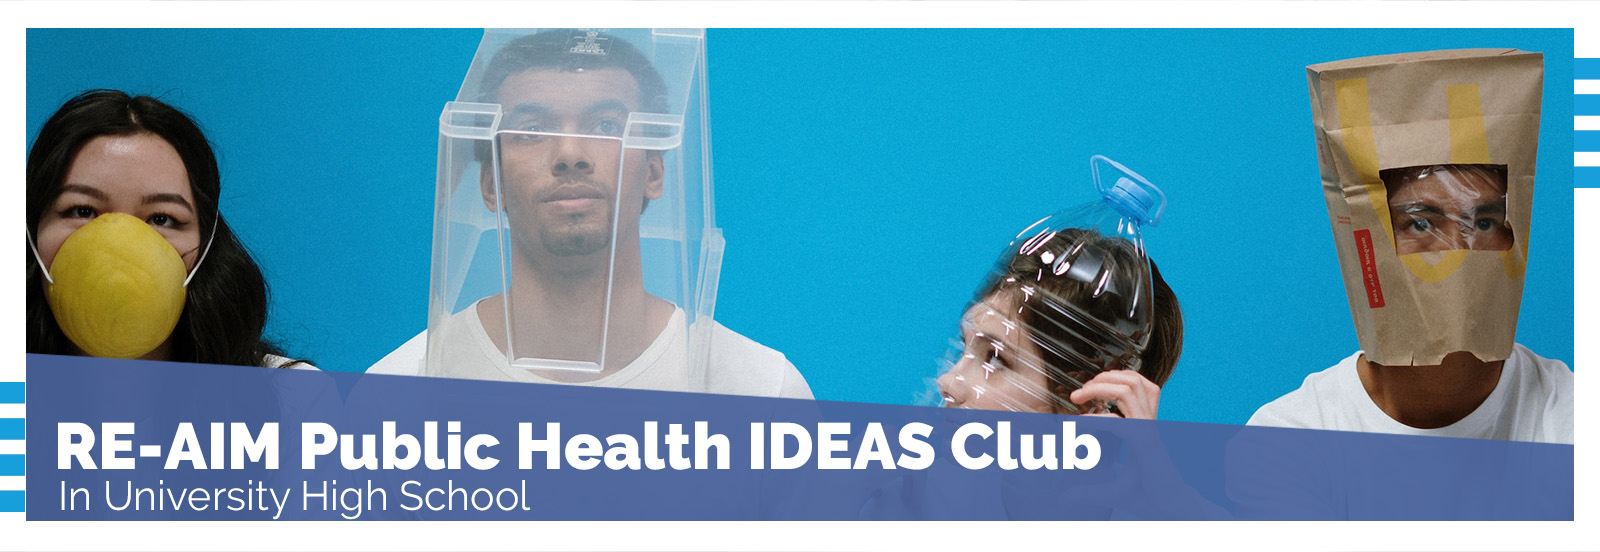 RE-AIM Public Health IDEA Club in High Schools